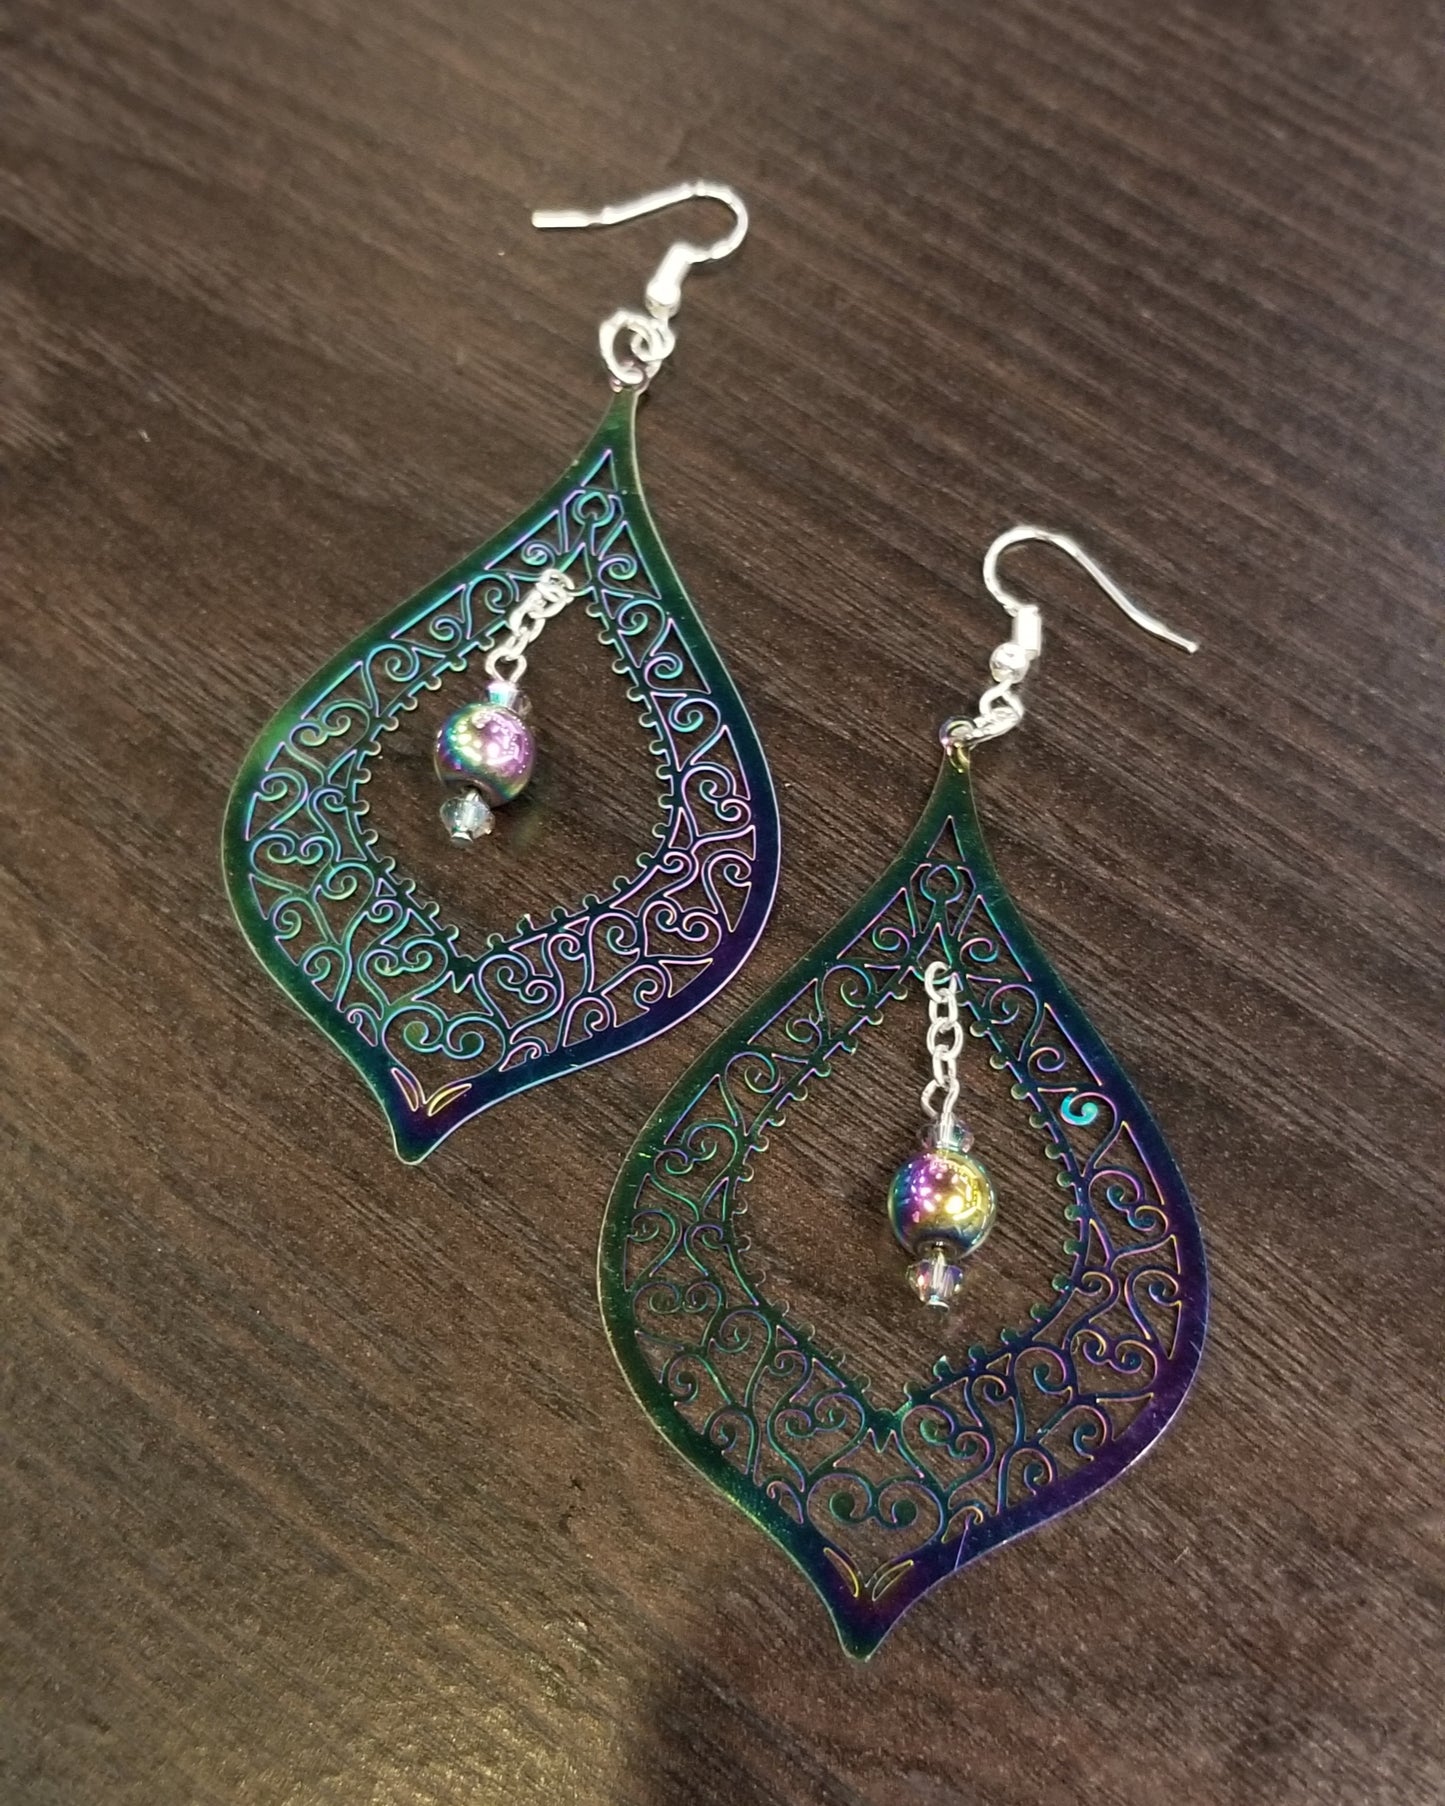 long boho hippie earrings with rainbow hematite beads in center